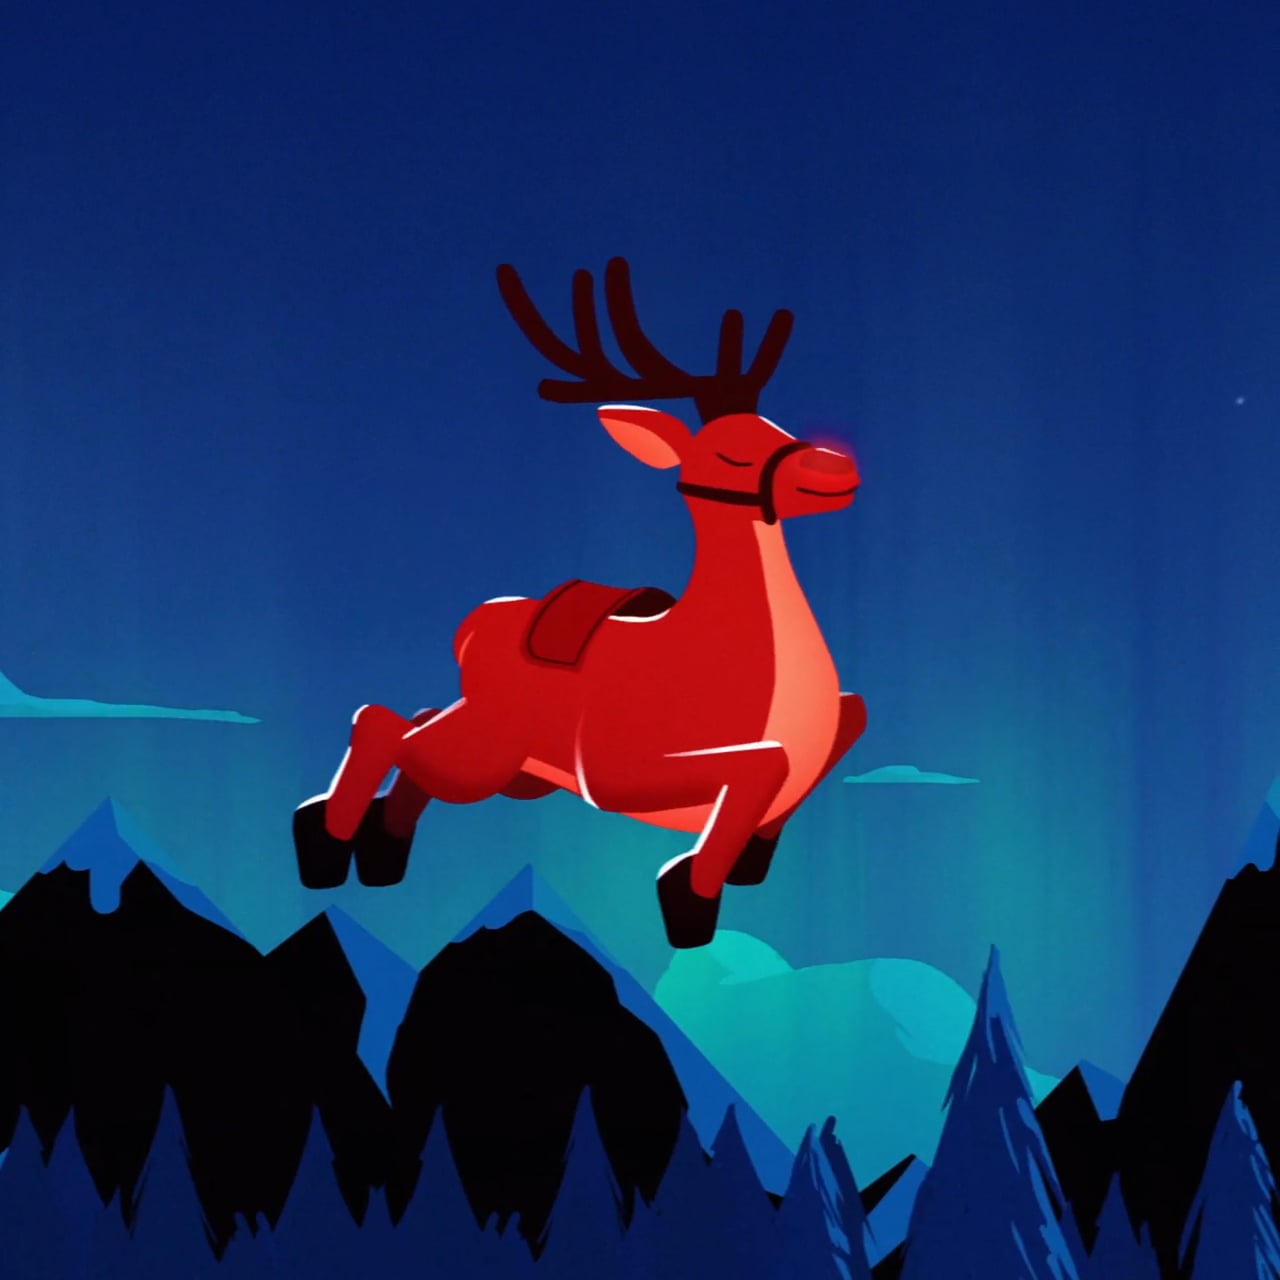 Run, Rudolph, run!